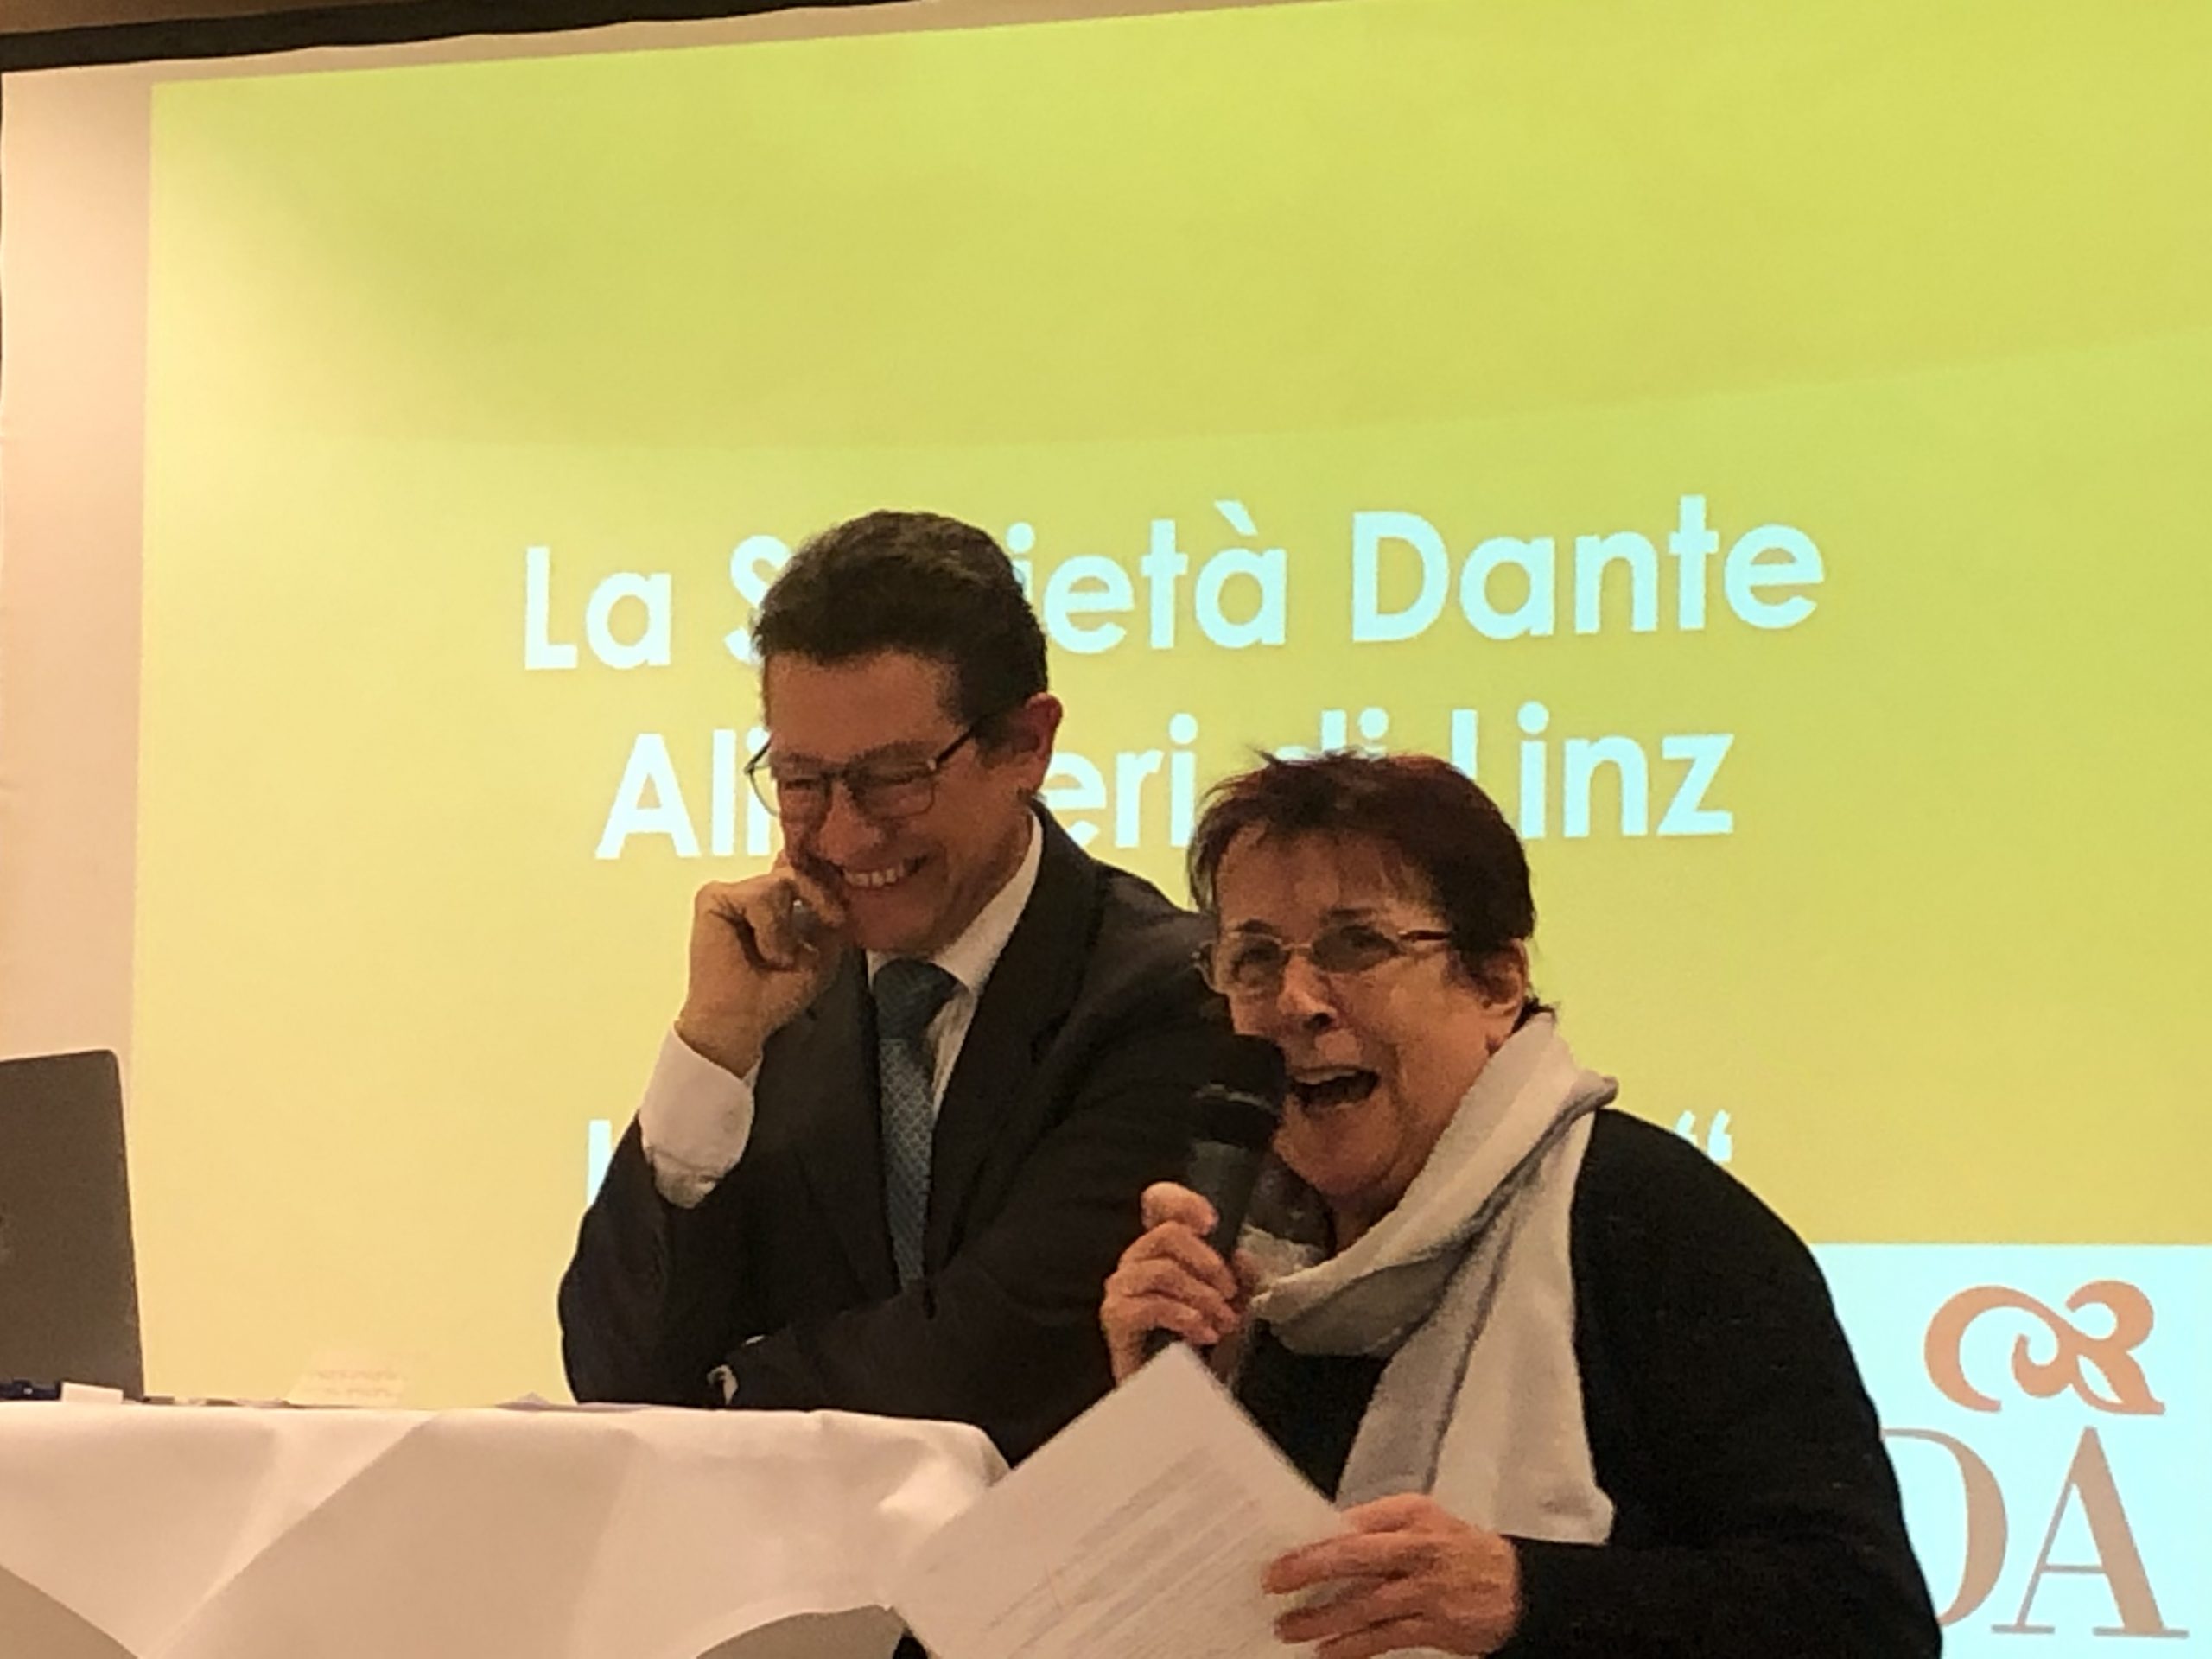 Fes­ta del­la Dan­te mit Gene­ral­ver­samm­lung 2020